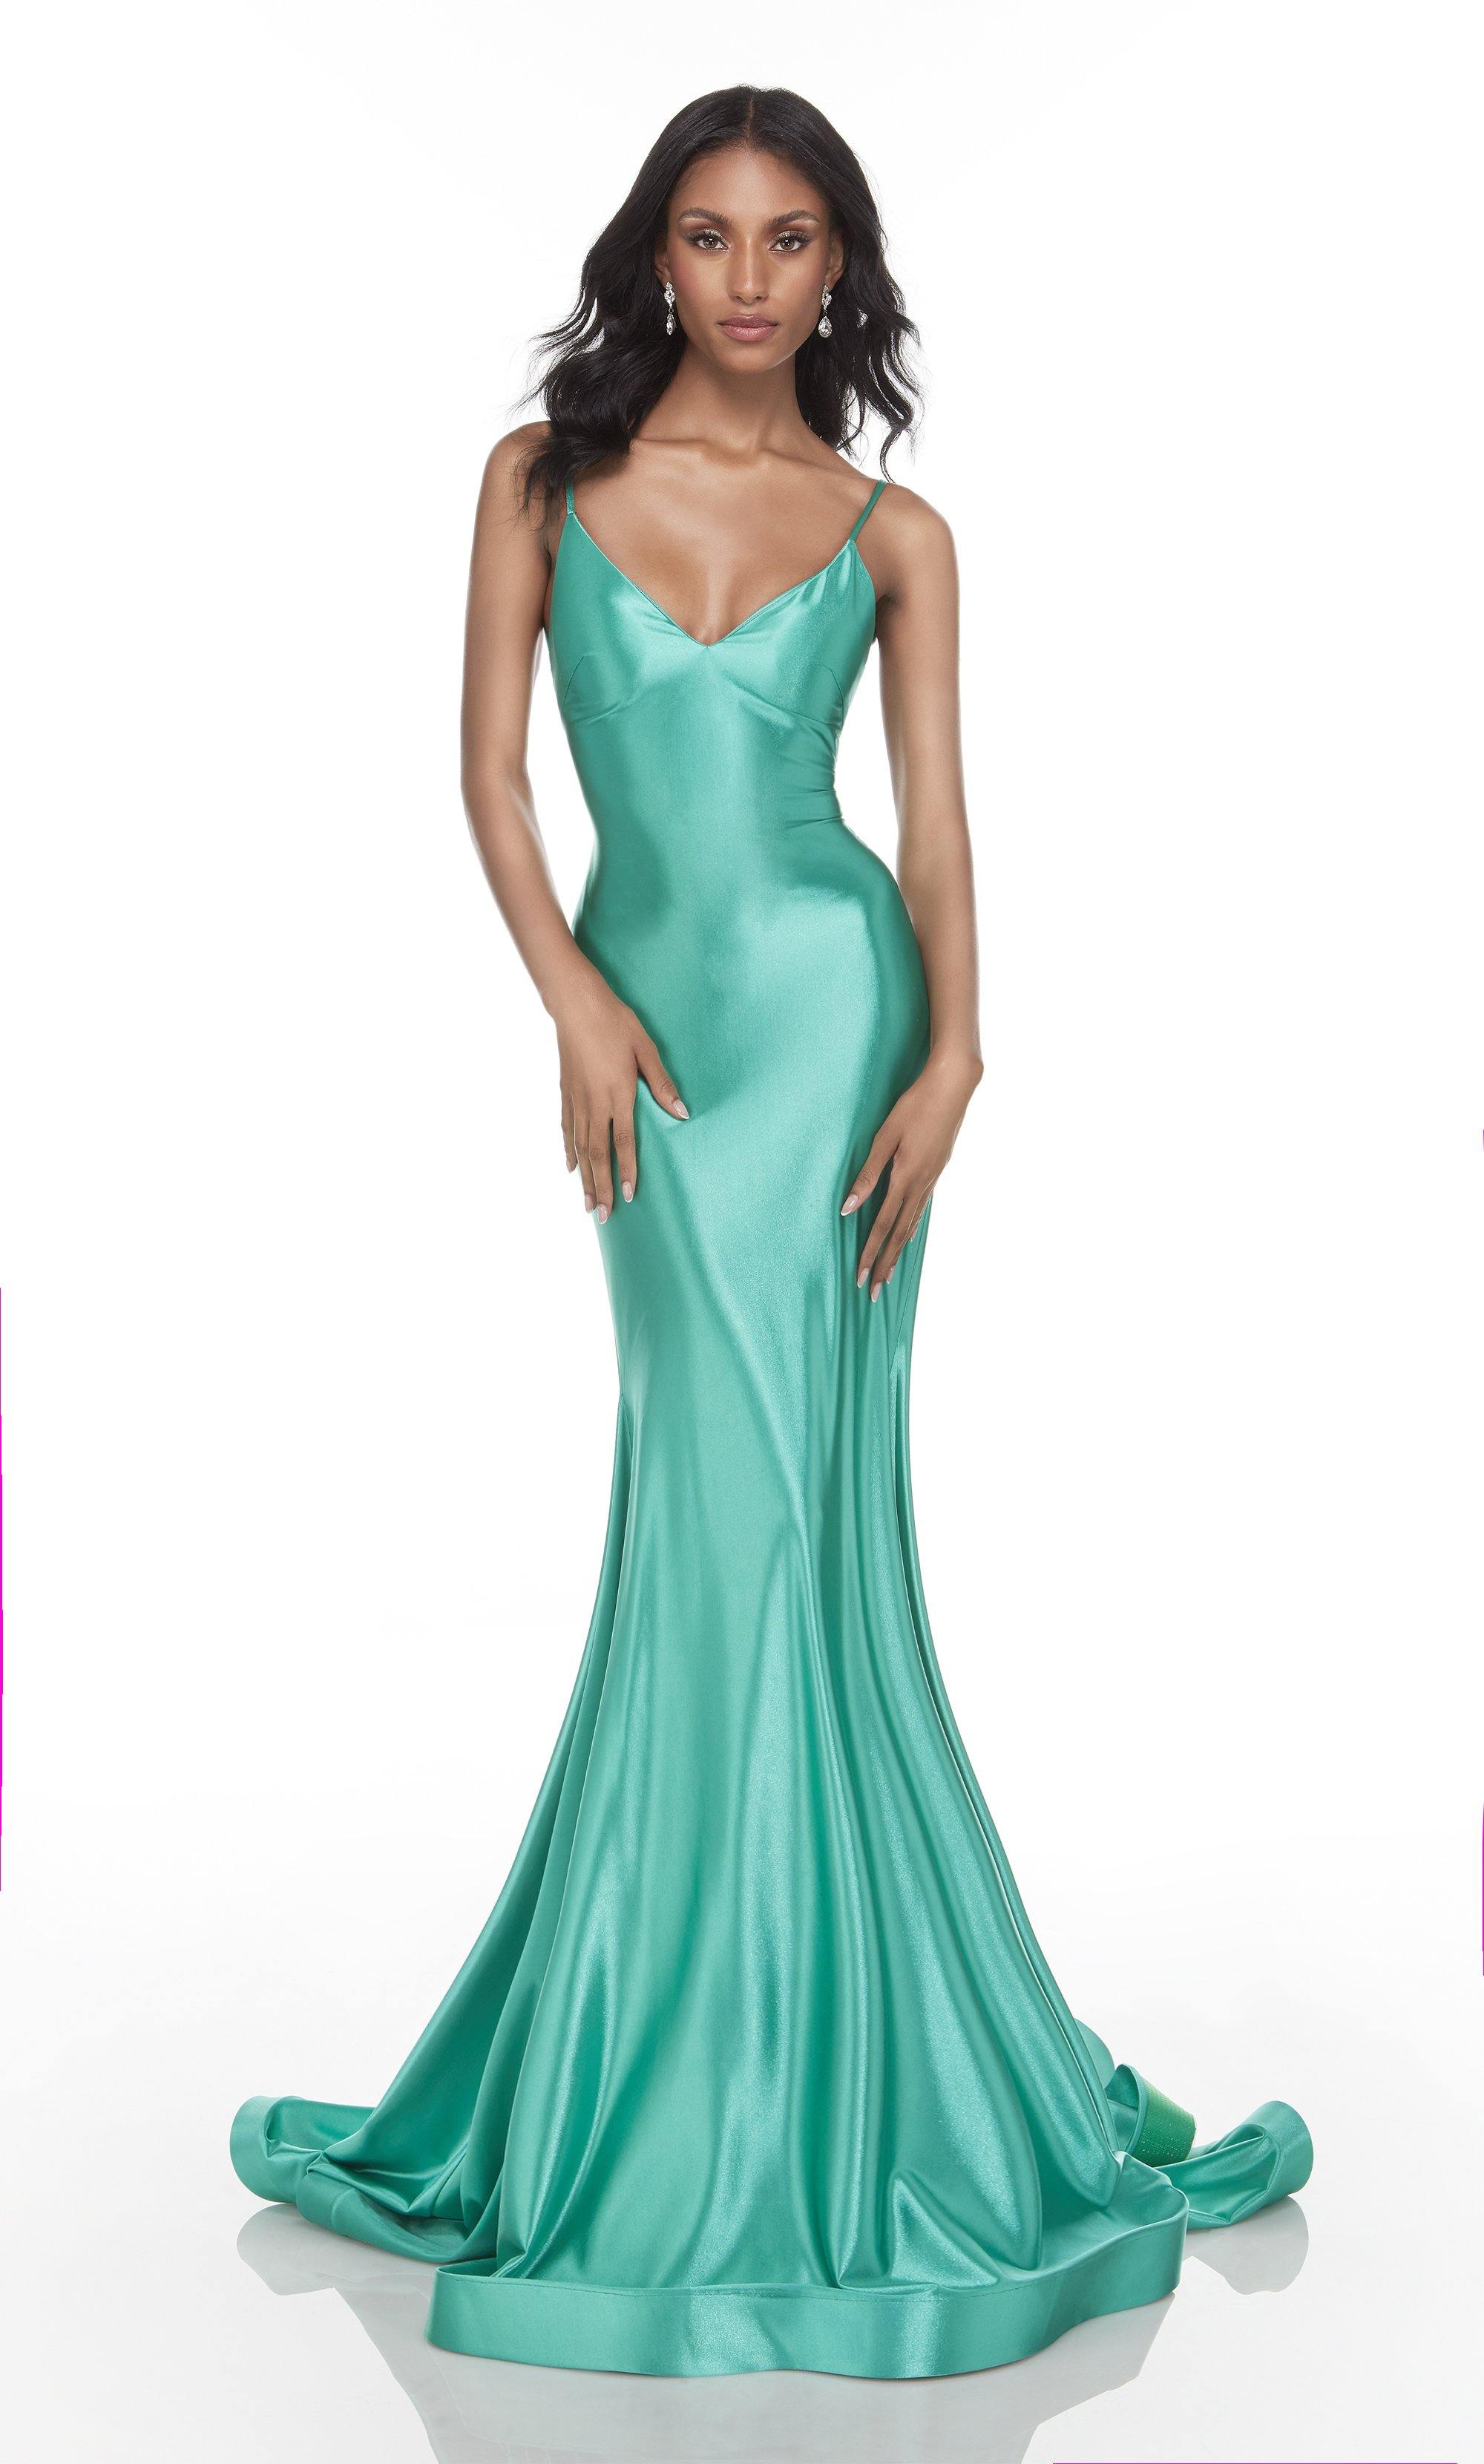 Sparkly Emerald Green Lace Prom Dresses Burgundy Formal Dress FD1157 v –  Viniodress